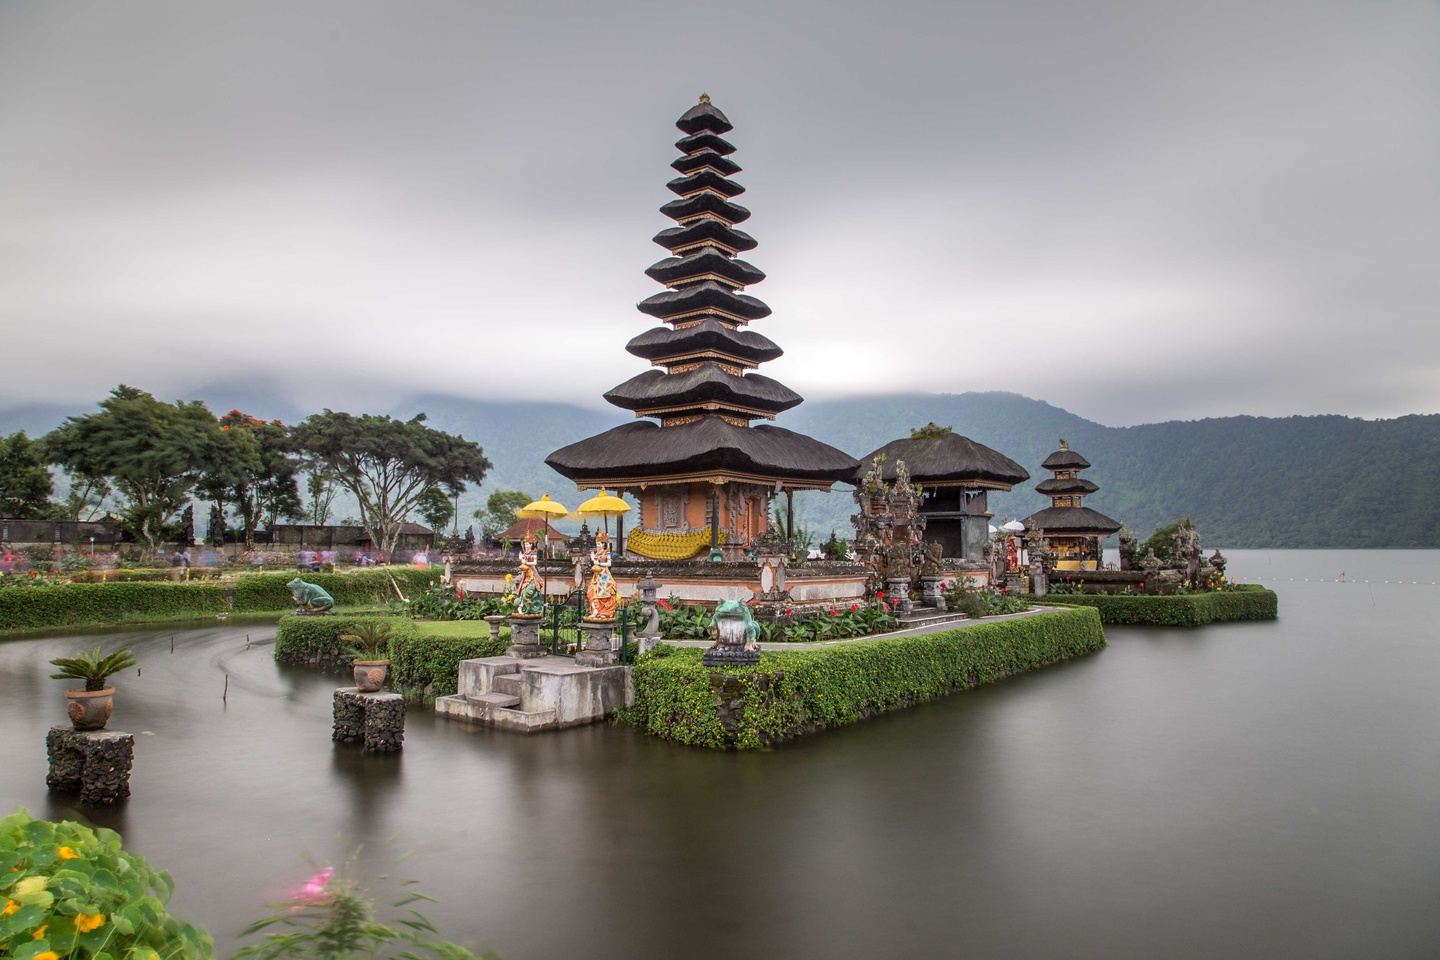 Baecation in Bali